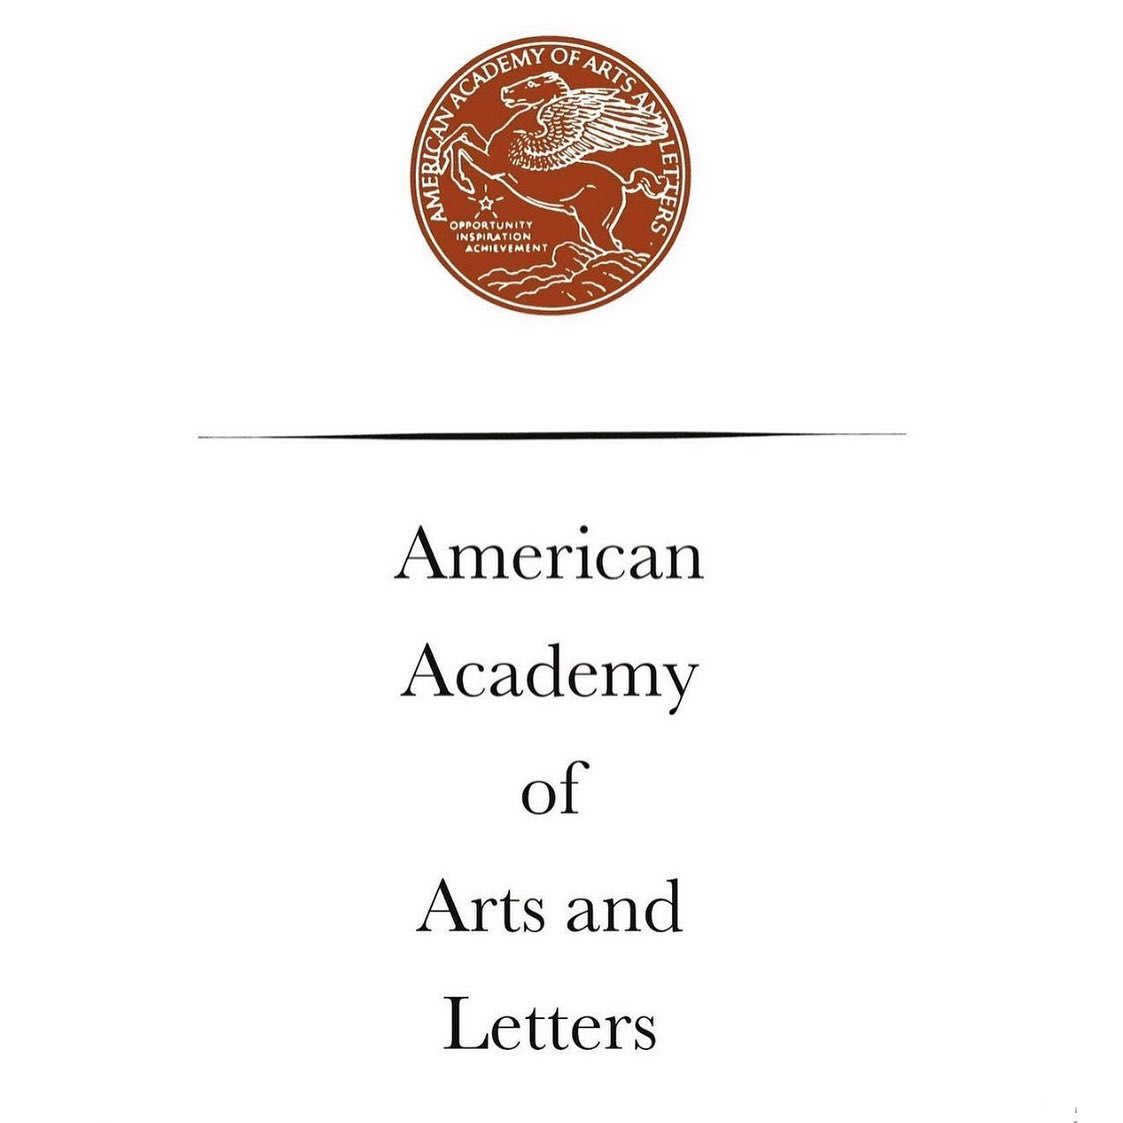 EMILY JACIR
Winner - 2023 Arts and Letters Award
American Academy of Arts and Letters
New York

***

#emilyjacir #americanacademyofartsandletters #newyork #award #artsandletters #peolasimondi